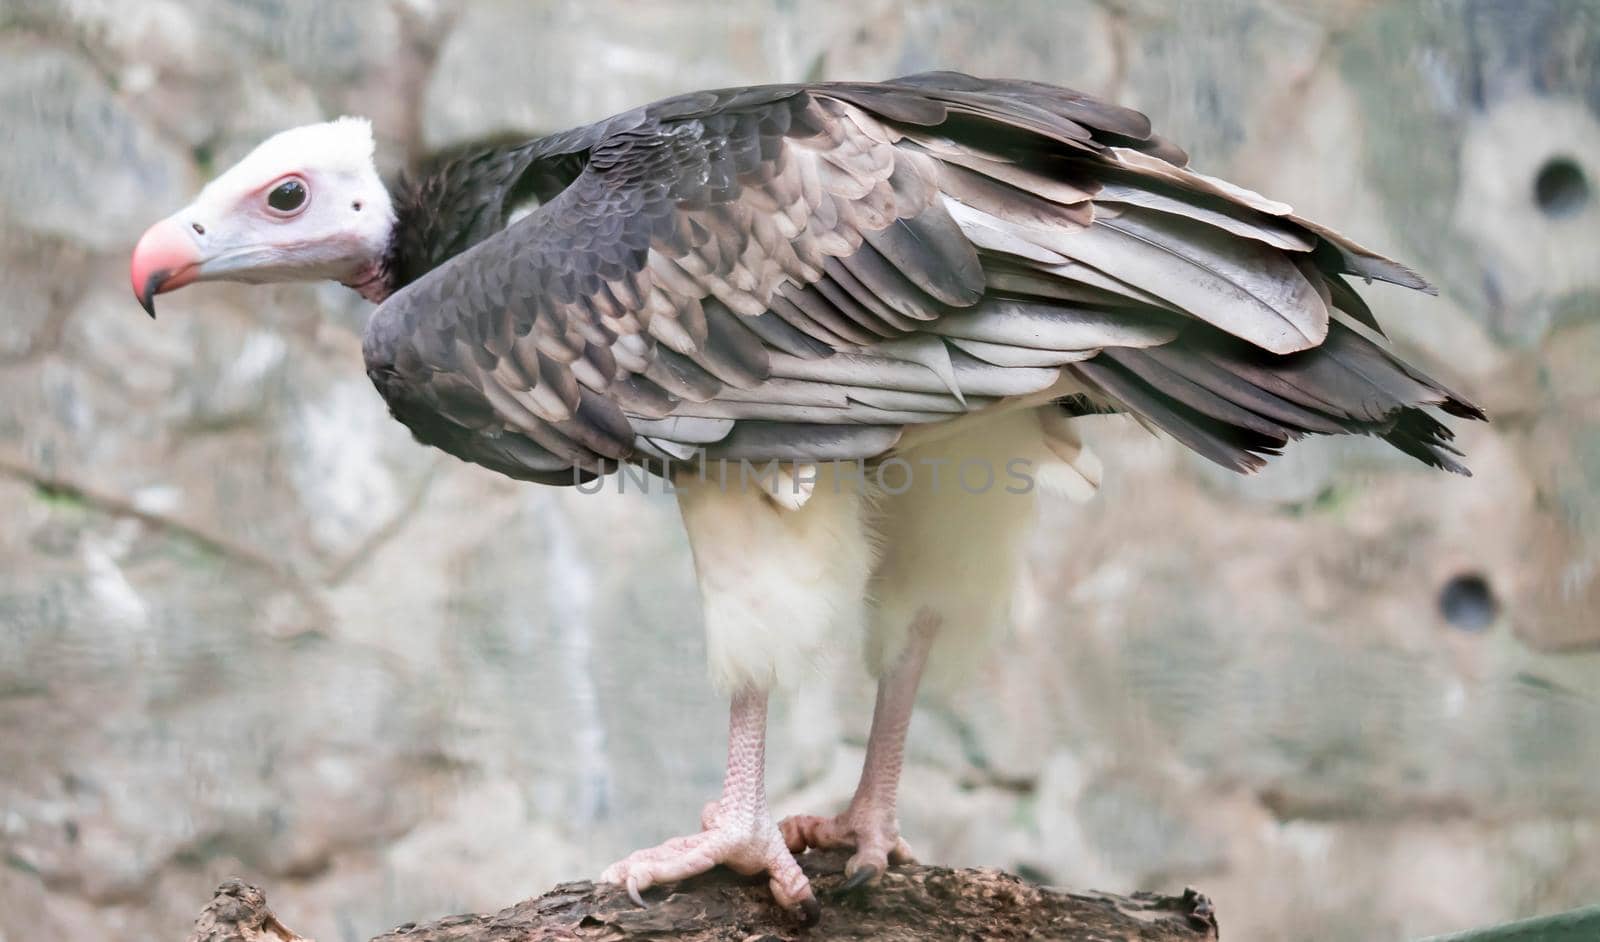 A White-headed vulture (Trigonoceps occipitalis)